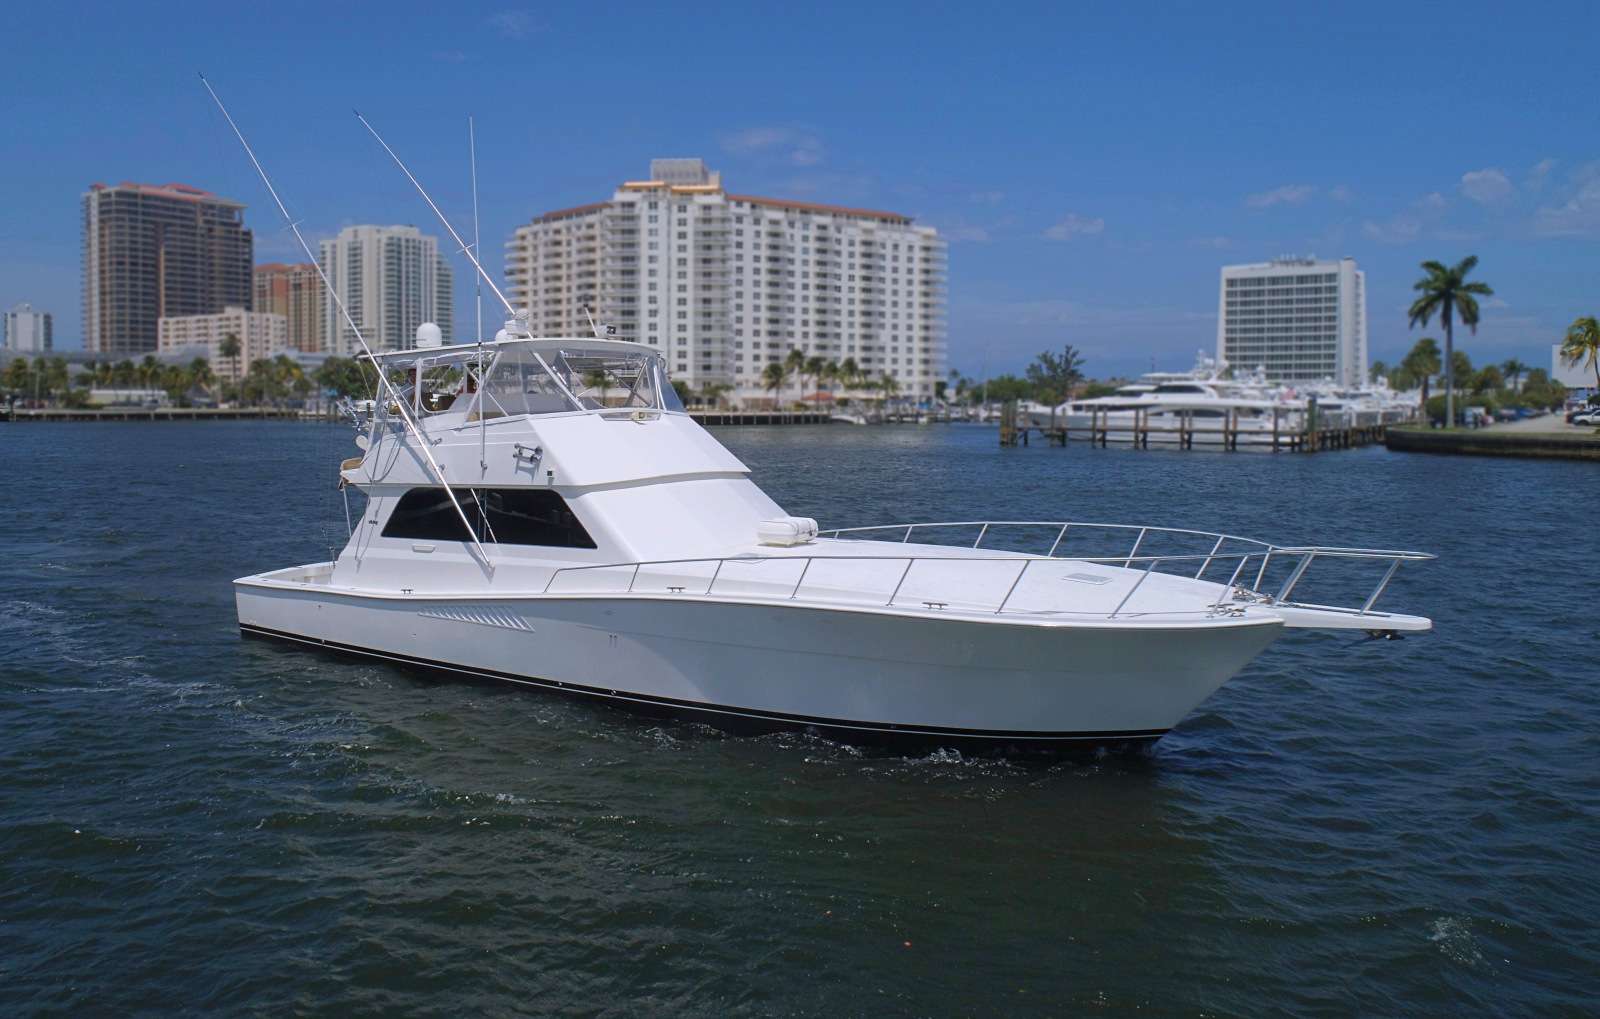 miss kethleen - Yacht Charter Florida & Boat hire in Florida & Bahamas 1